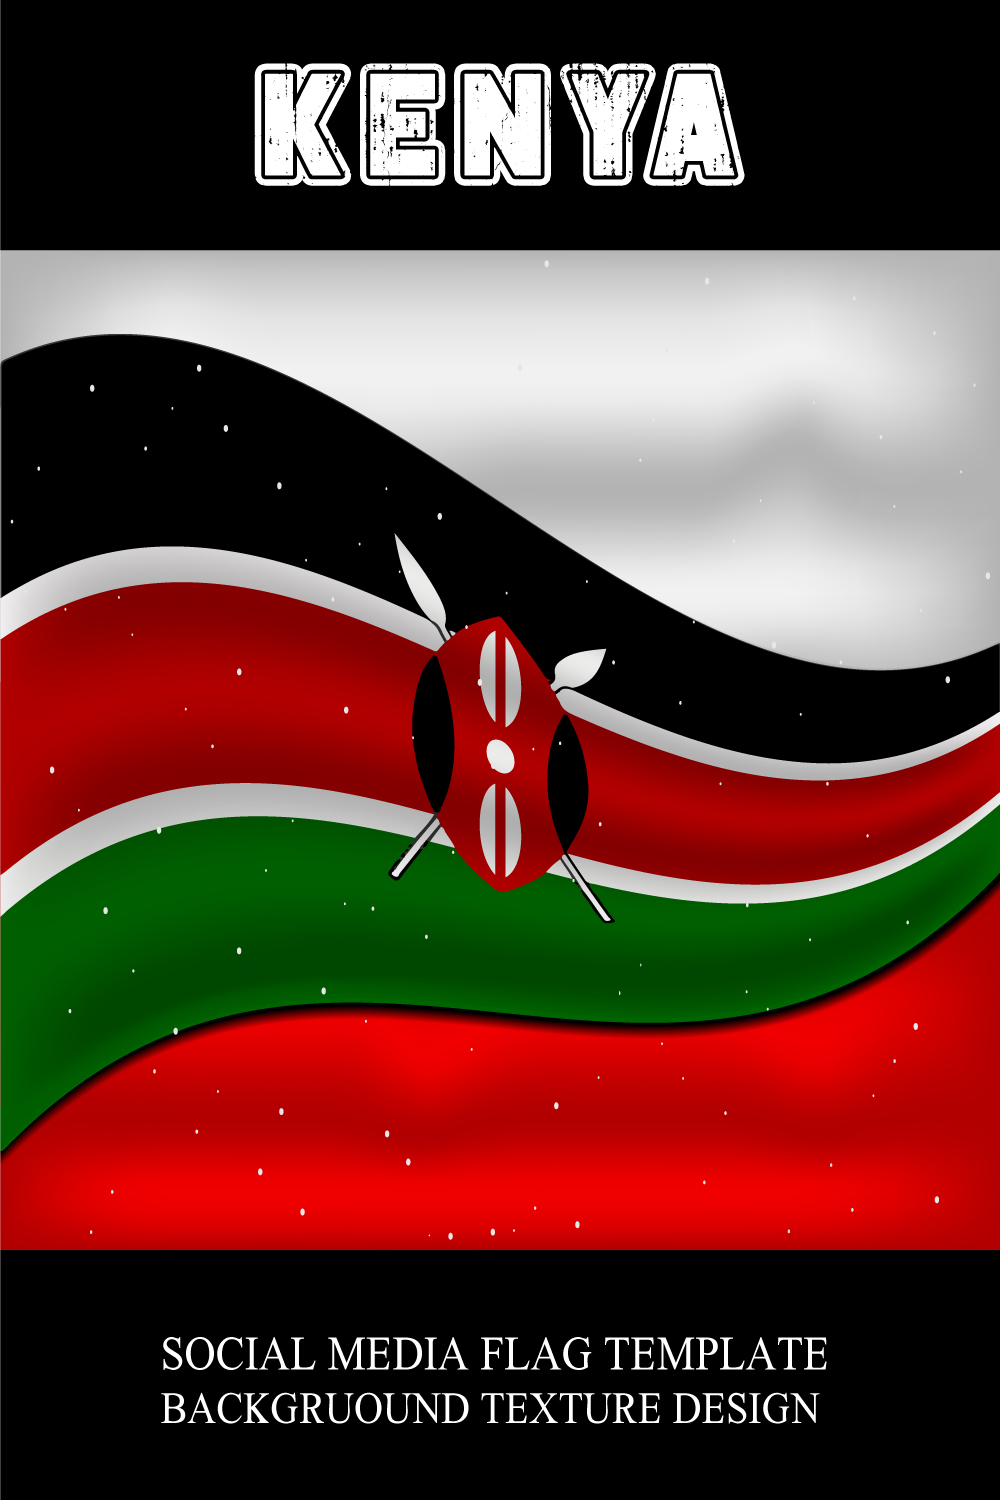 Enchanting image of the flag of Kenya.